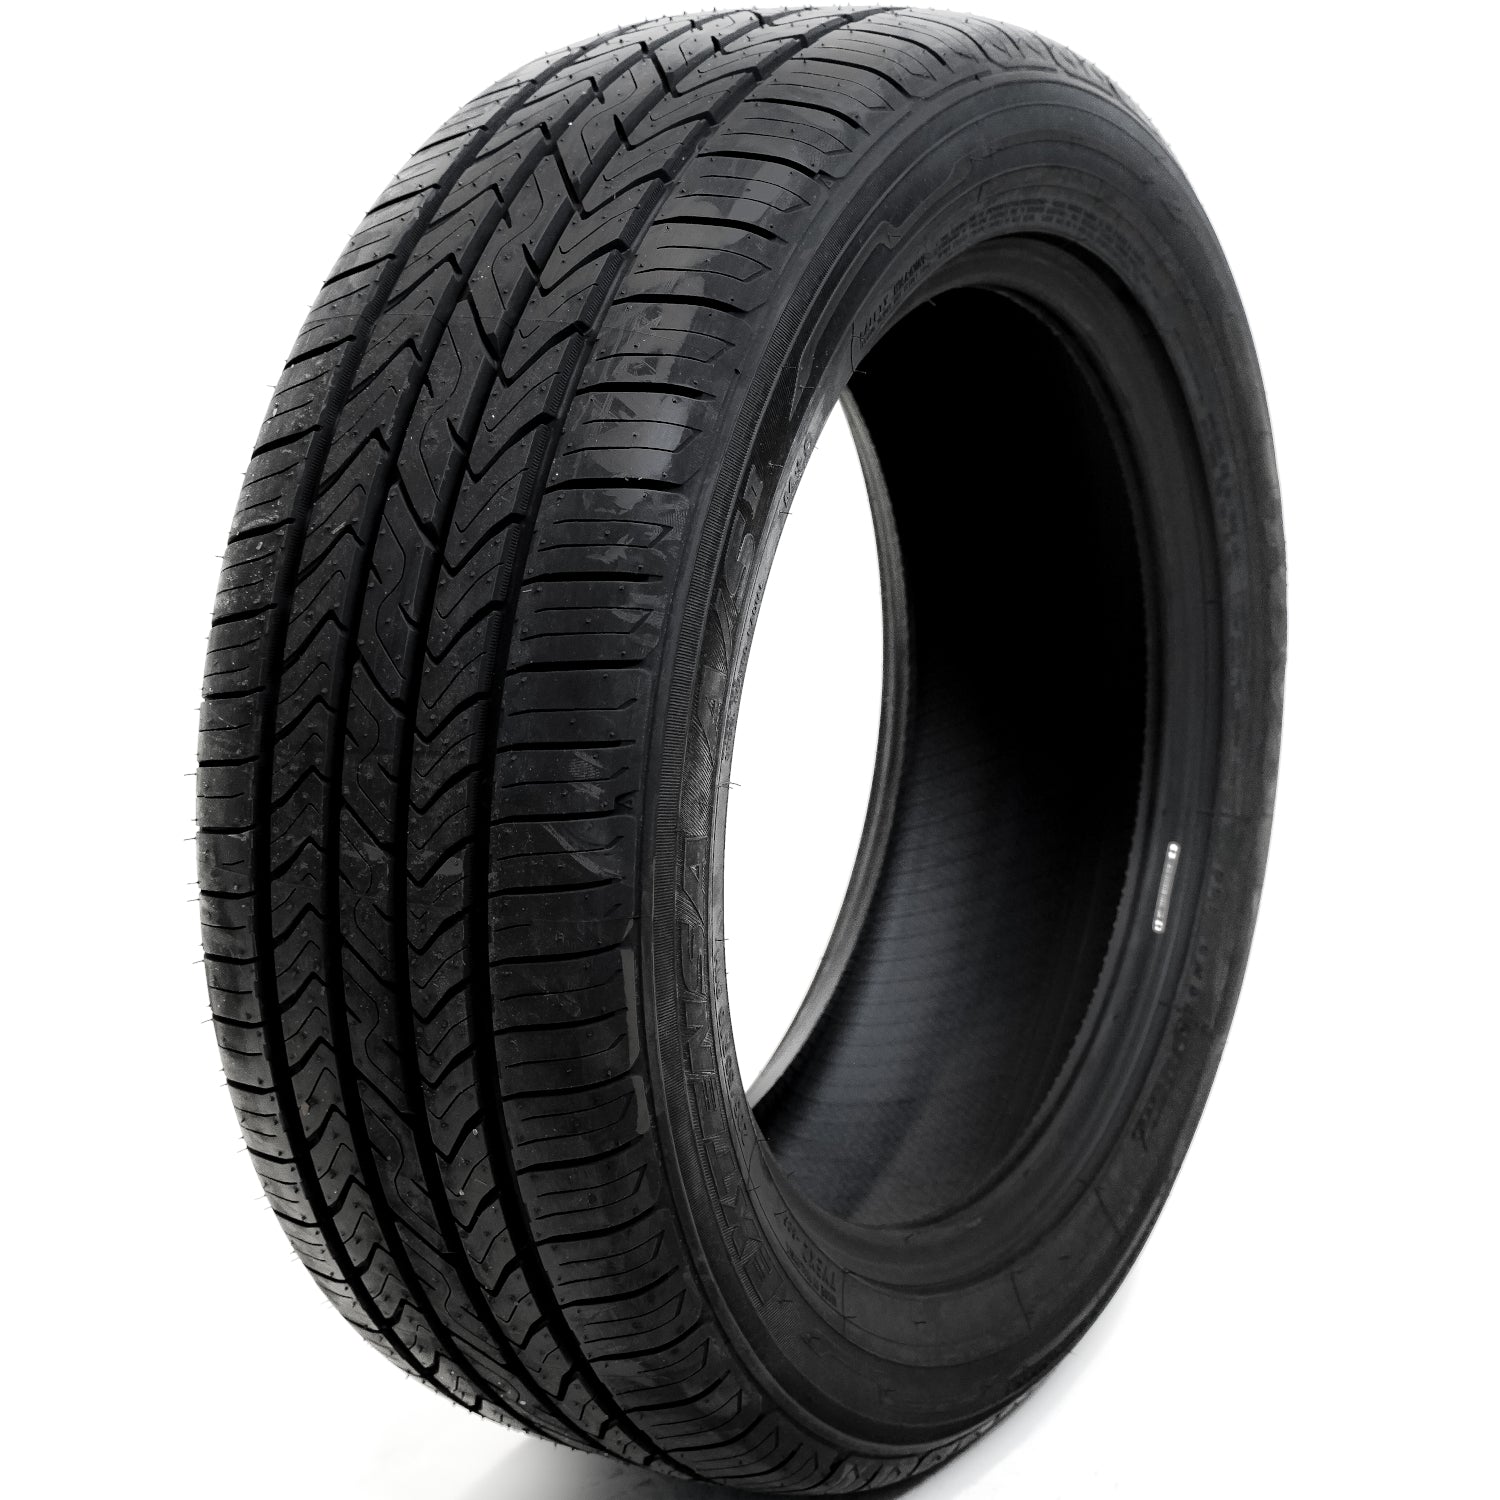 TOYO TIRES EXTENSA A/S II P215/60R15 93H (25.2X8.5R 15) Tires